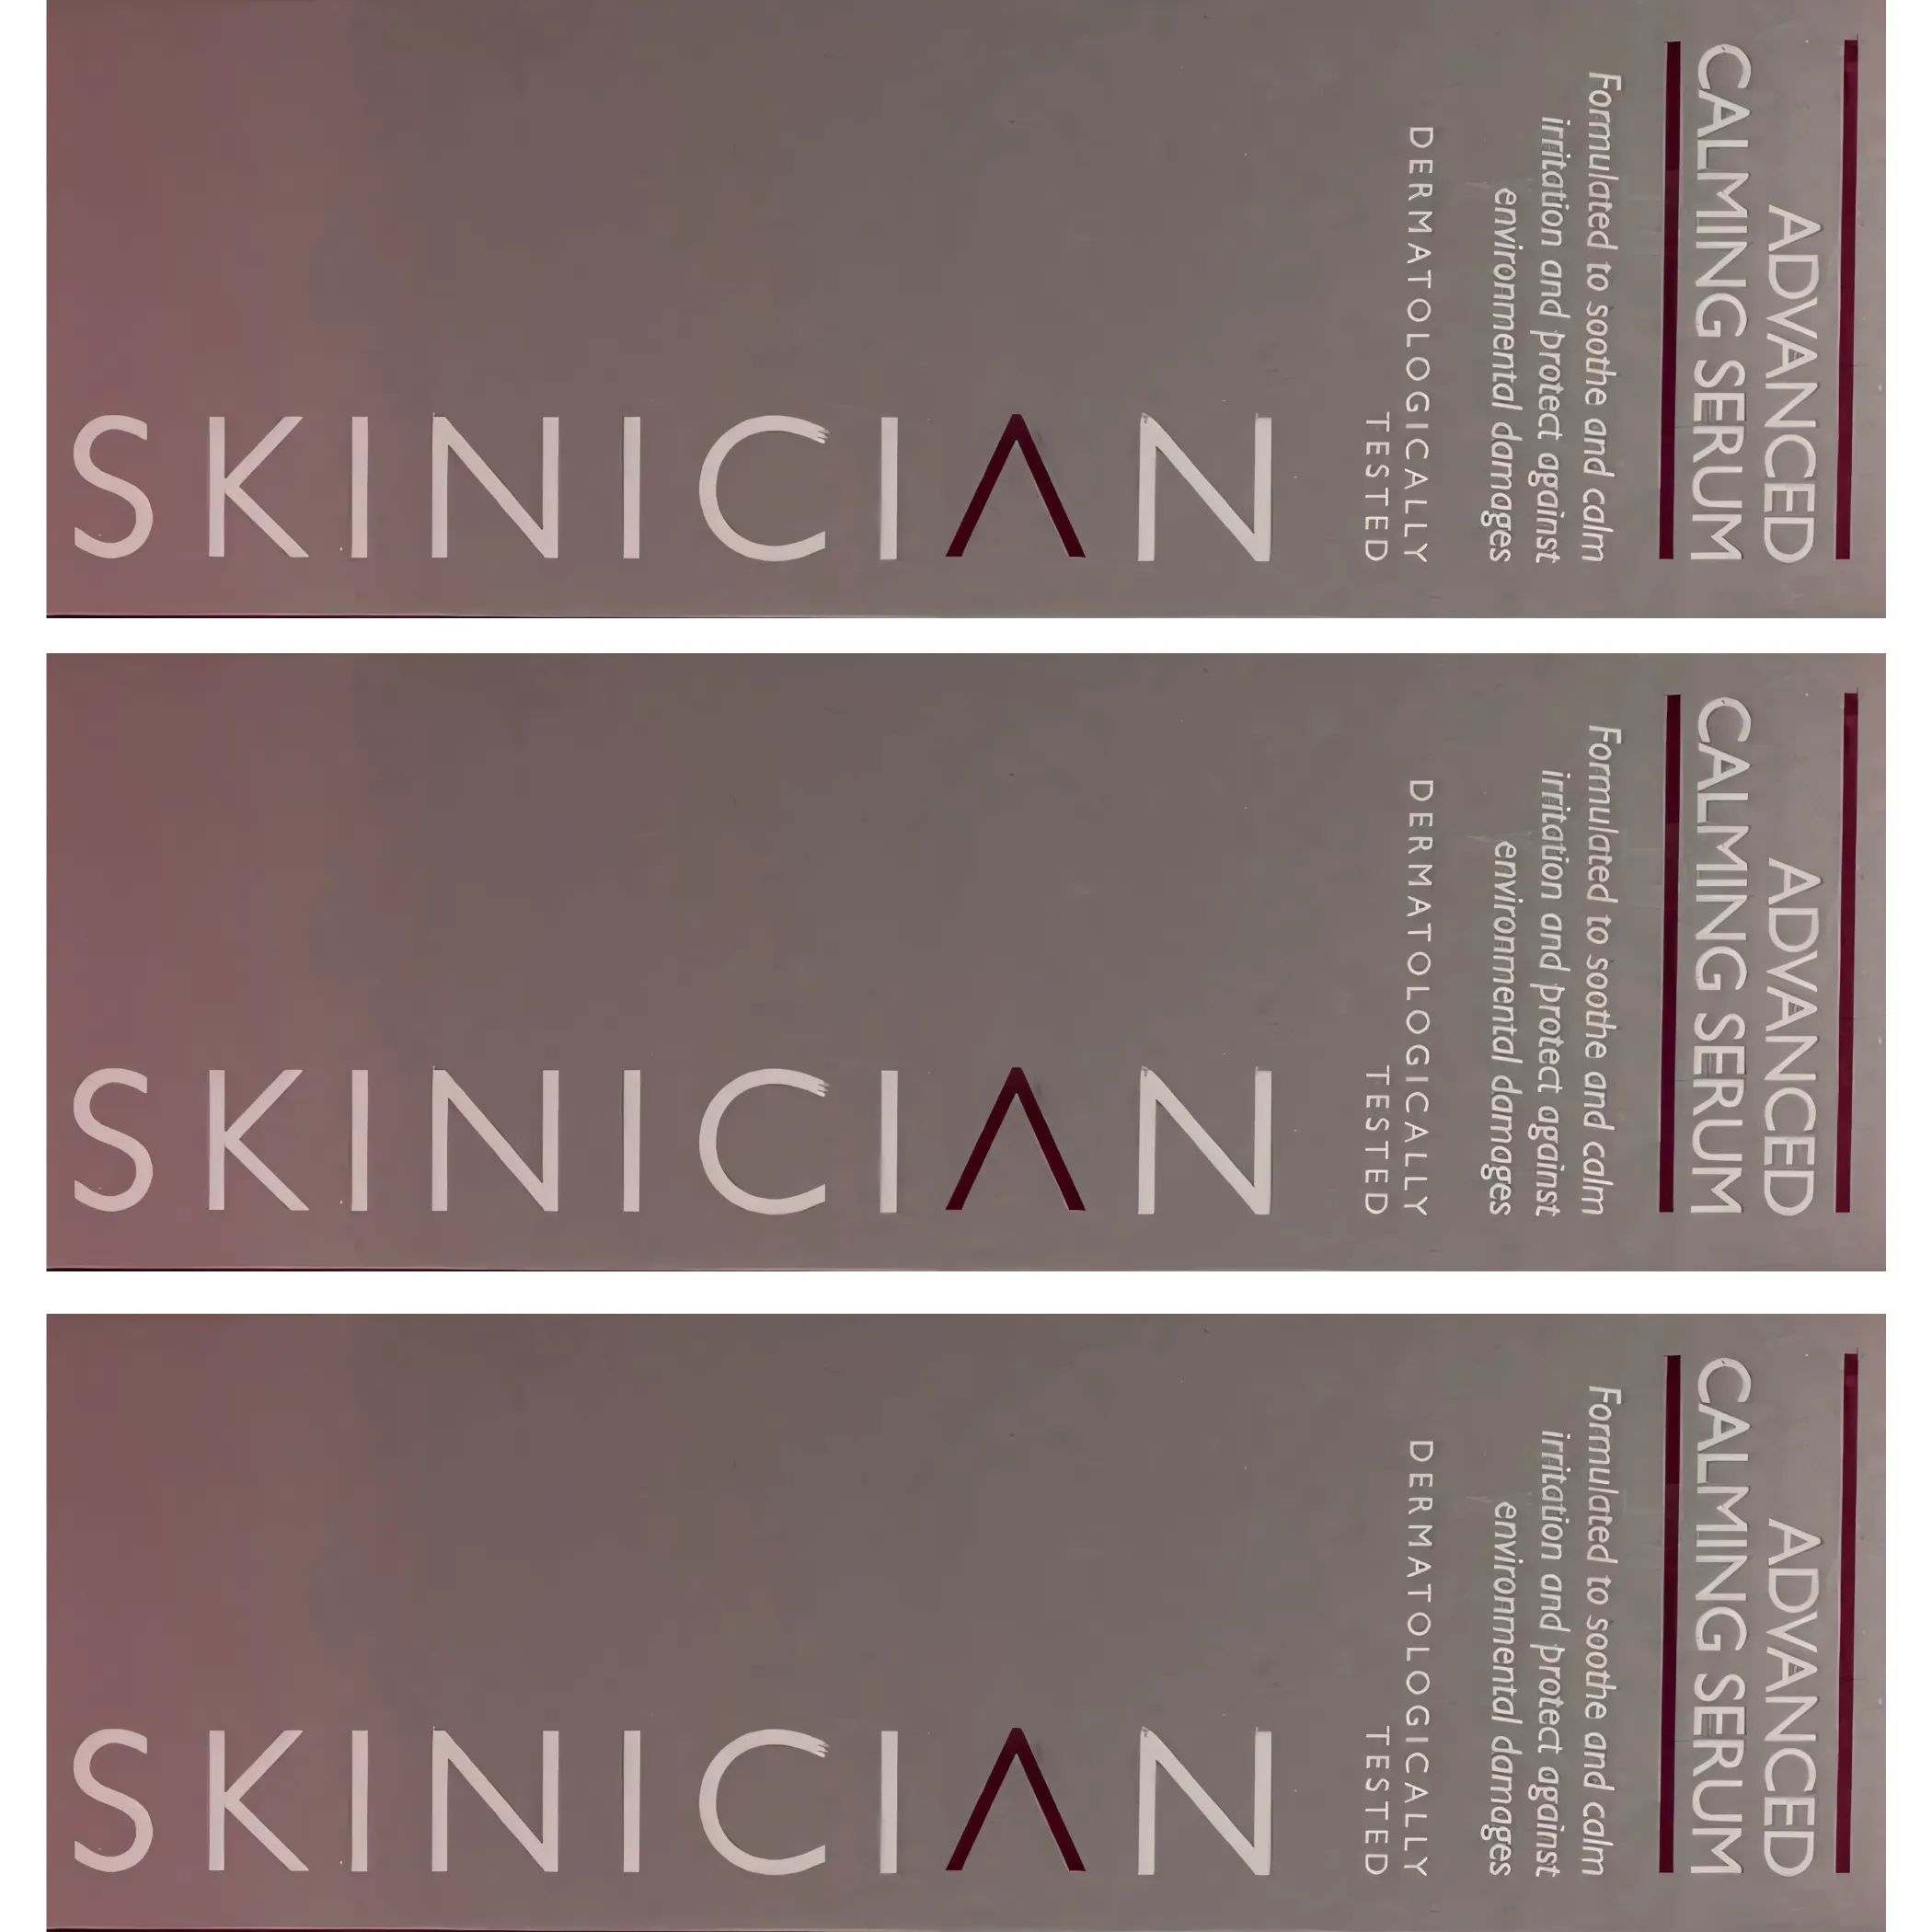 Free Skinician Skincare Samples